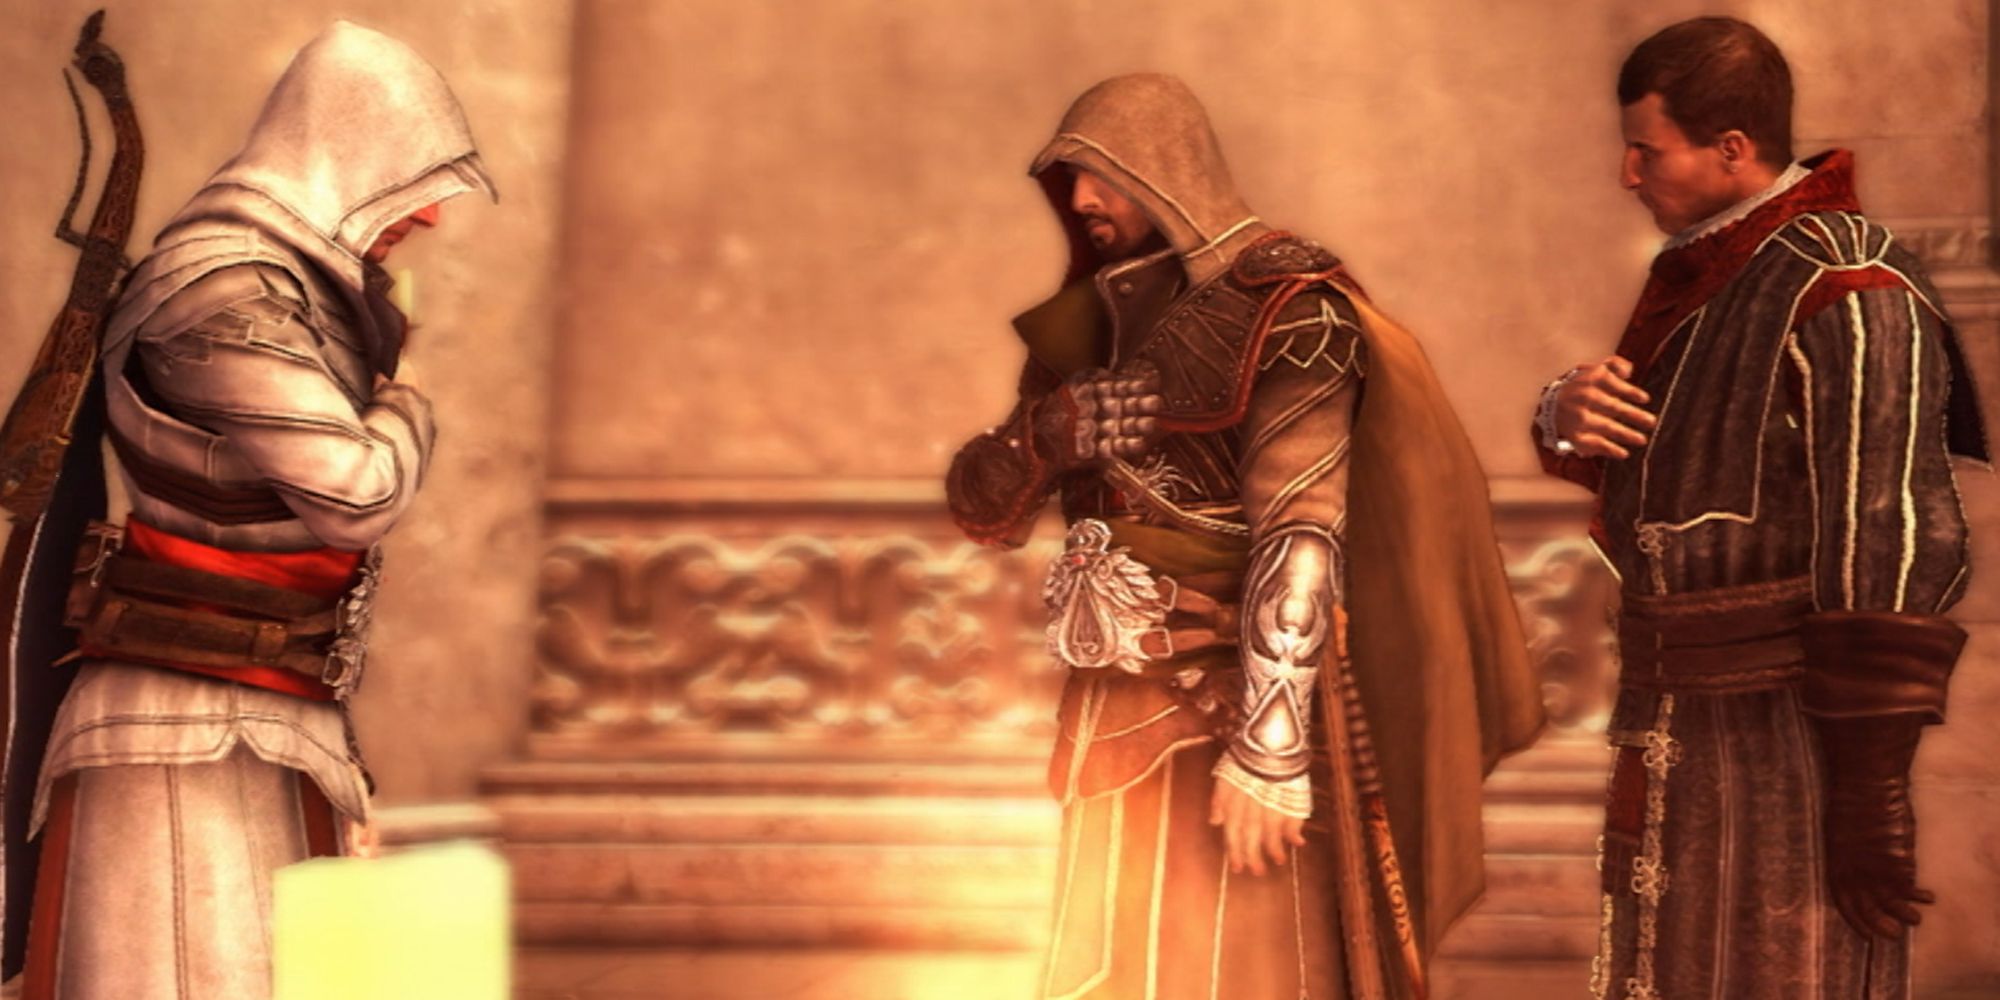 Assassin's Creed Brotherhood Ezio